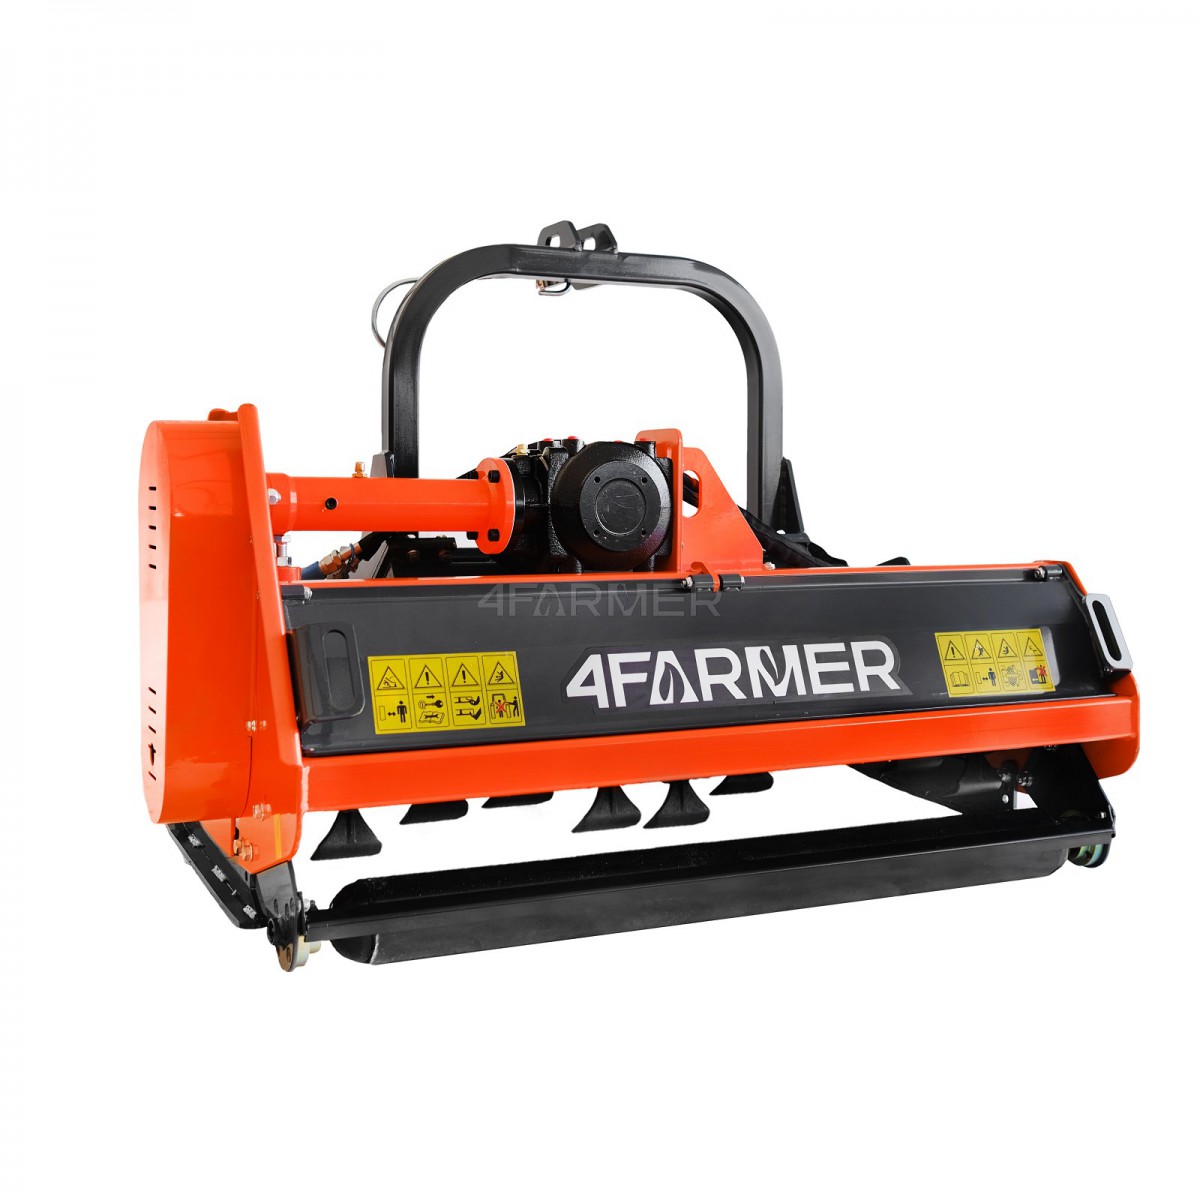 EFGCH 165D 4FARMER flail mower - orange